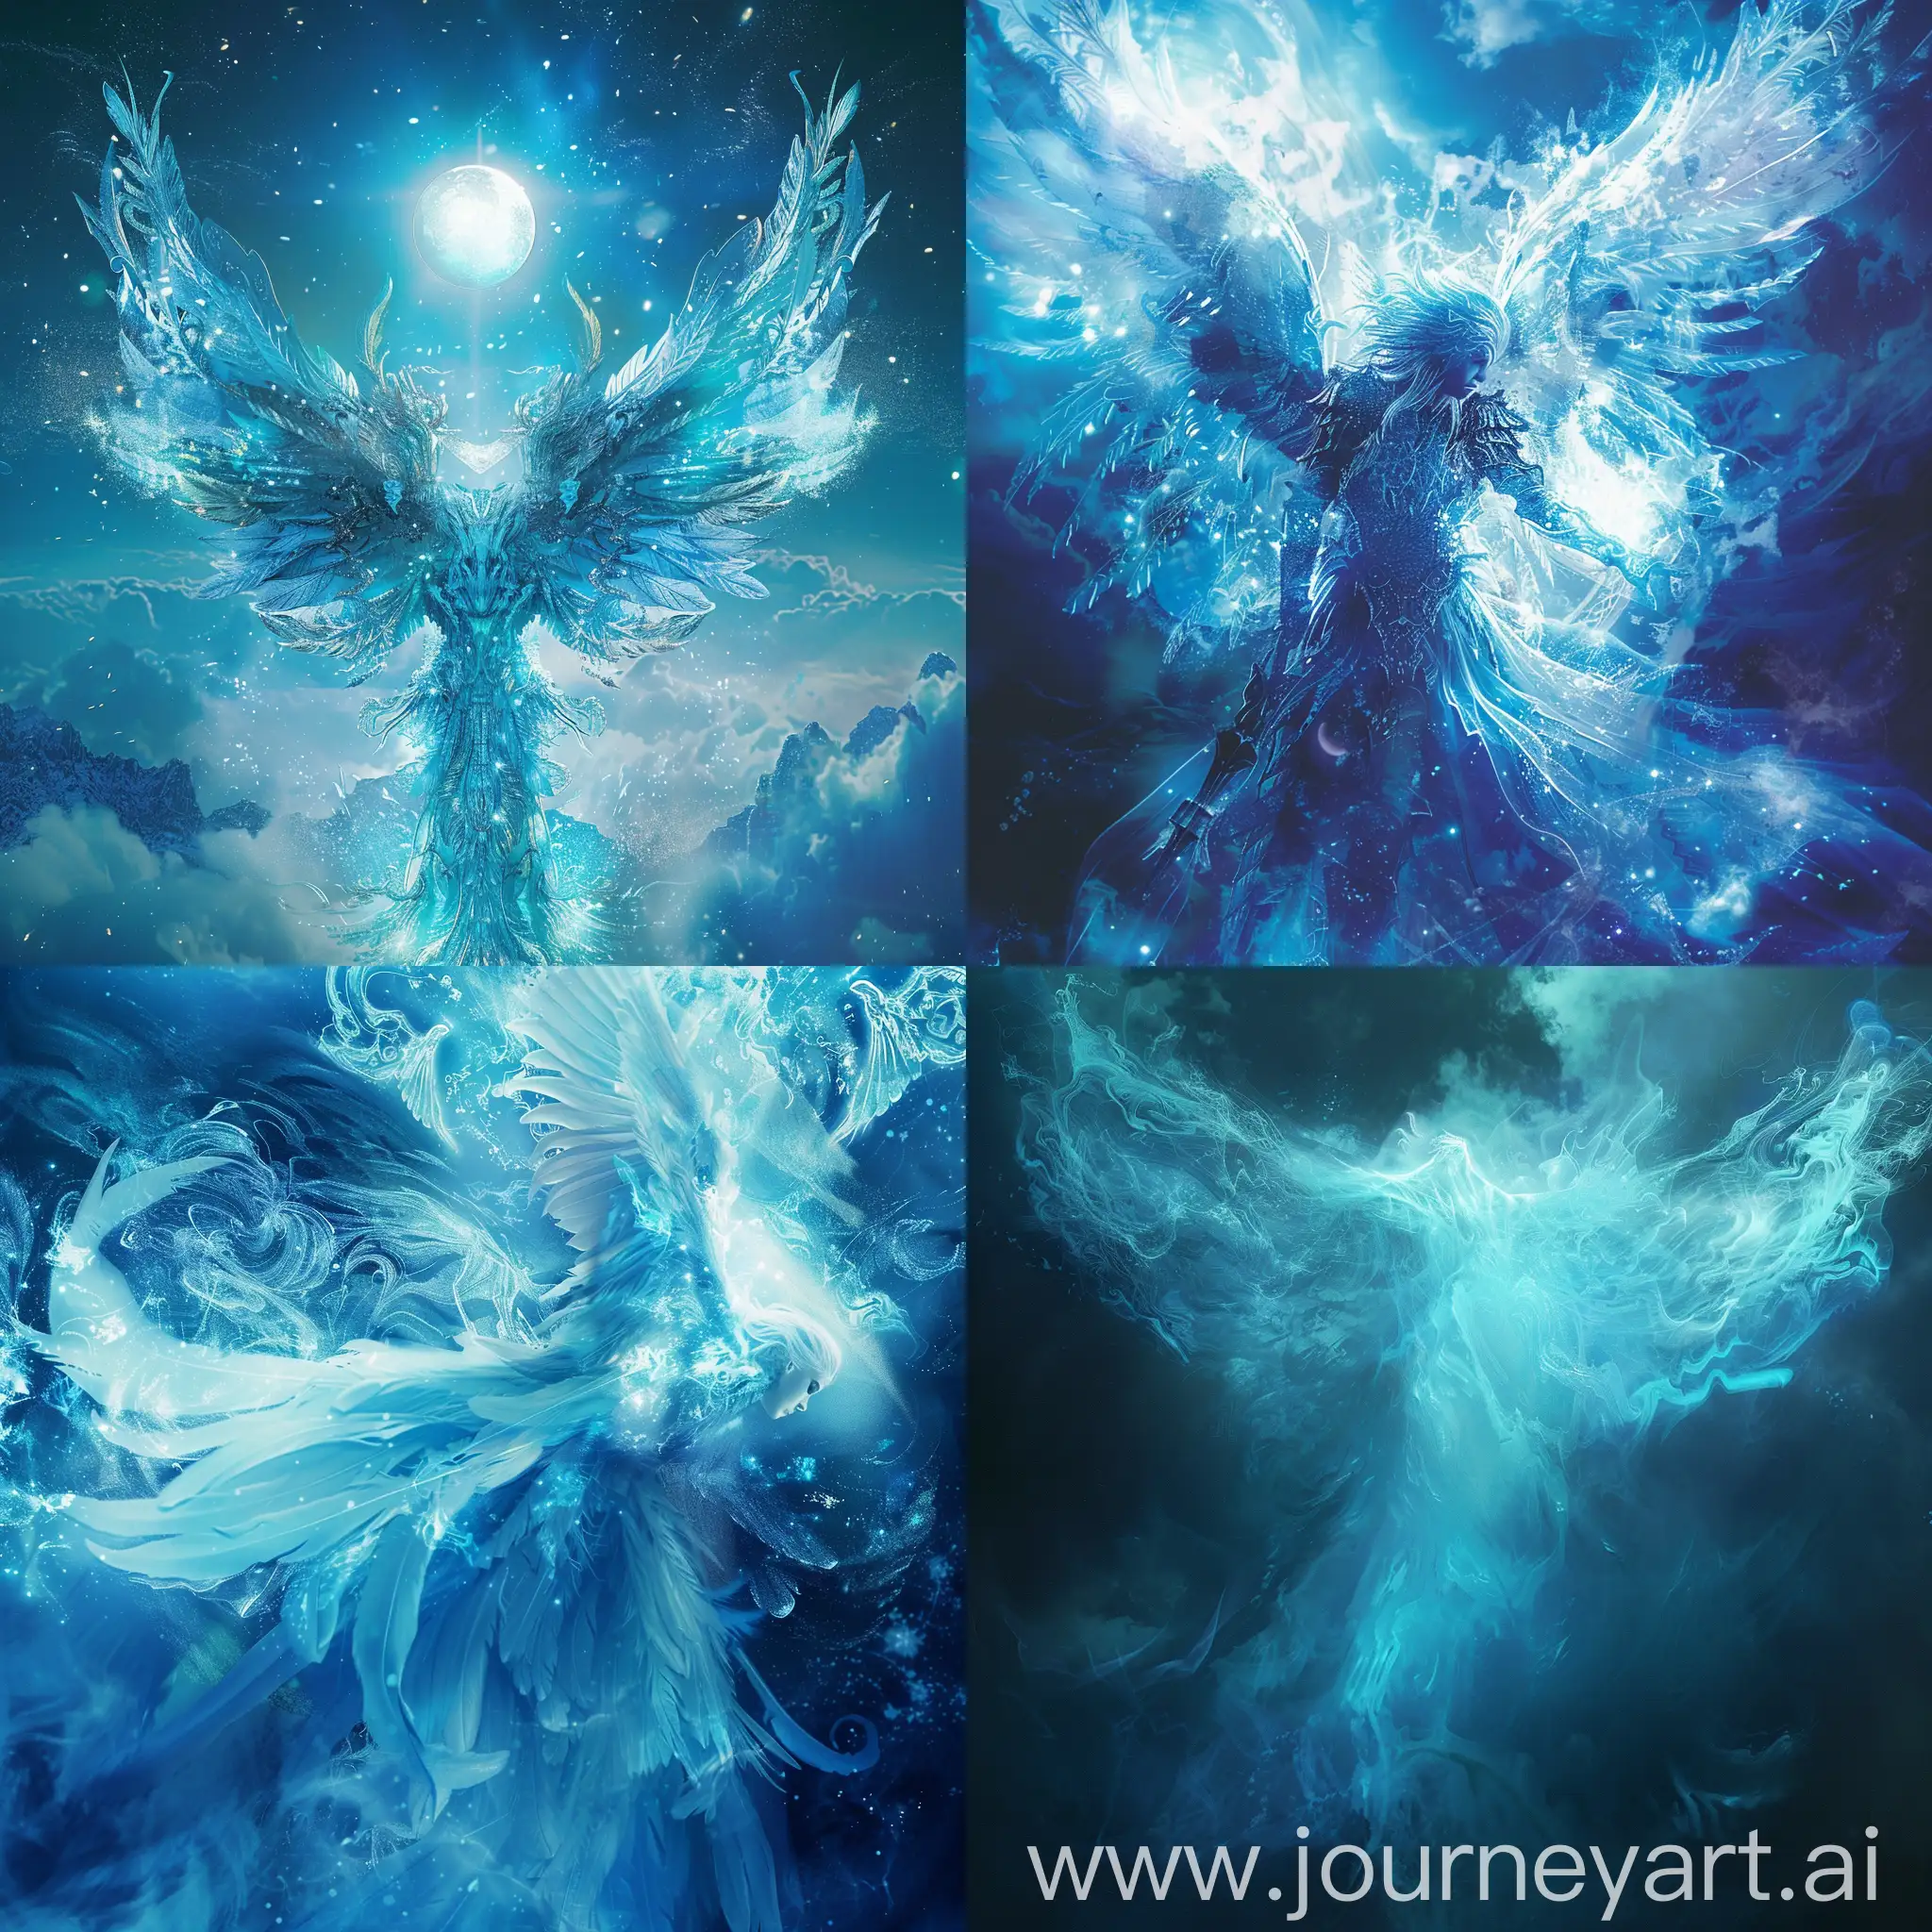 Enchanting-Ethereal-Spirit-Album-Cover-in-Fantasy-Blue